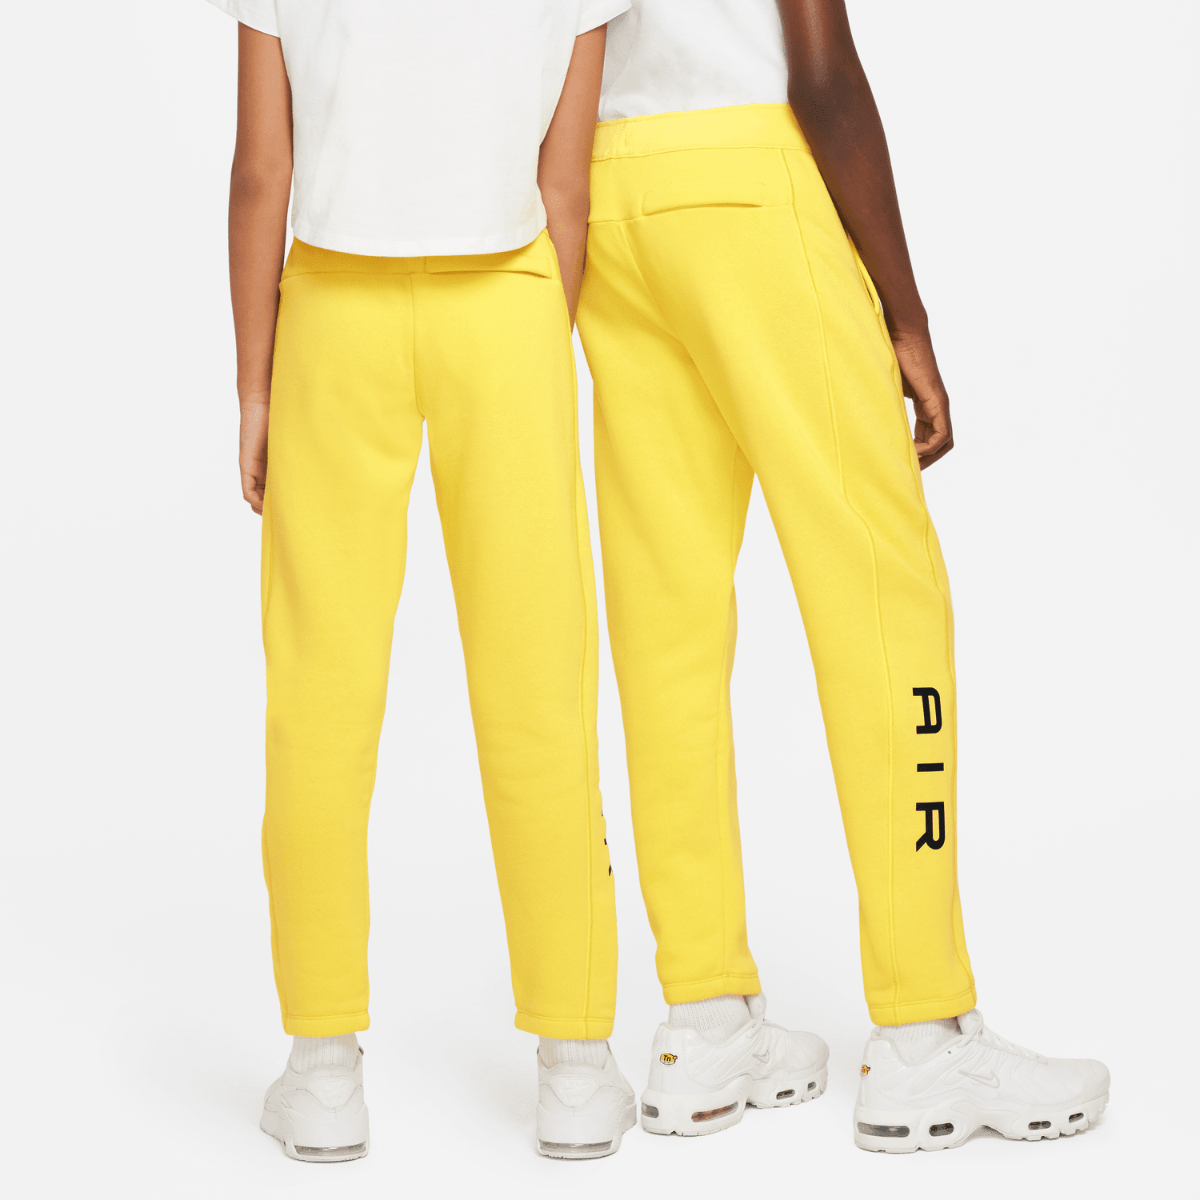 Pantaloni Nike Air Junior - Giallo/Nero